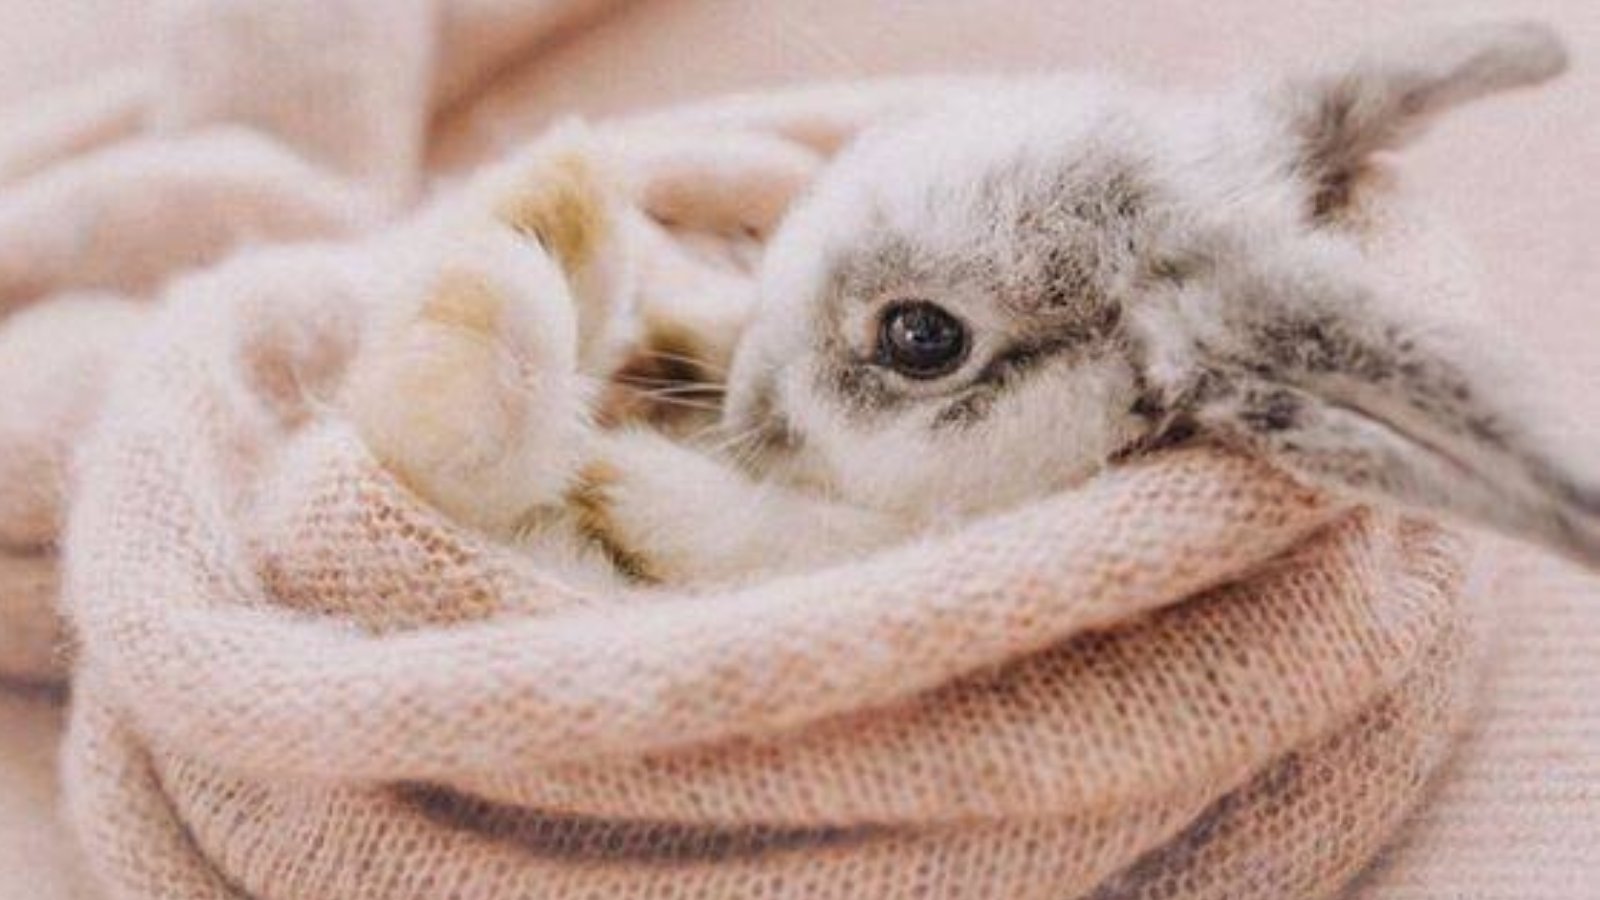 Daily Bunny Memes 🇺🇦 on X: Shhh, the baby bunny is trying to sleep! # bunnies #rabbit #rabbits #rabbitlove #rabbitlife #bunny #bunnylove  #bunnylovers #bunnyrabbit #うさぎ #兎  / X